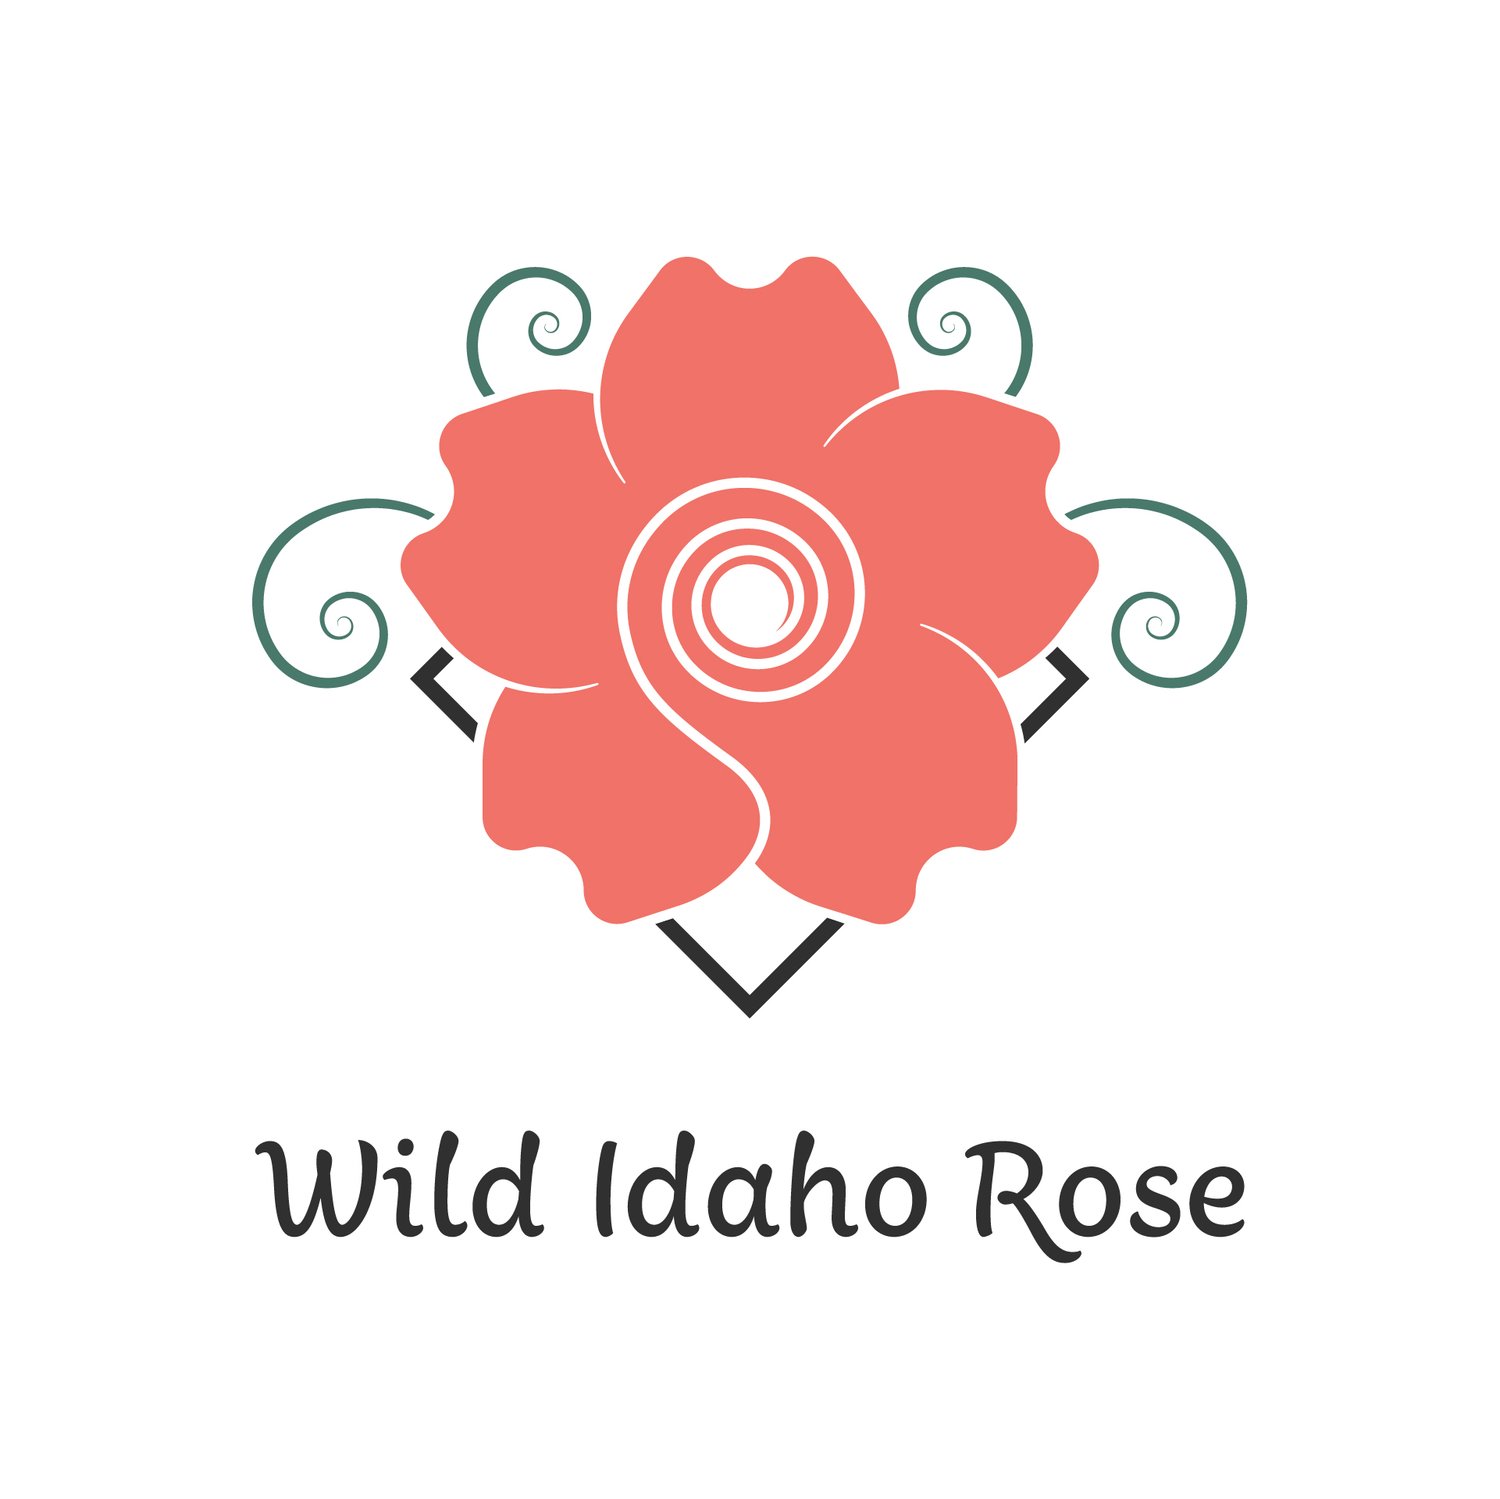 Wild Idaho Rose